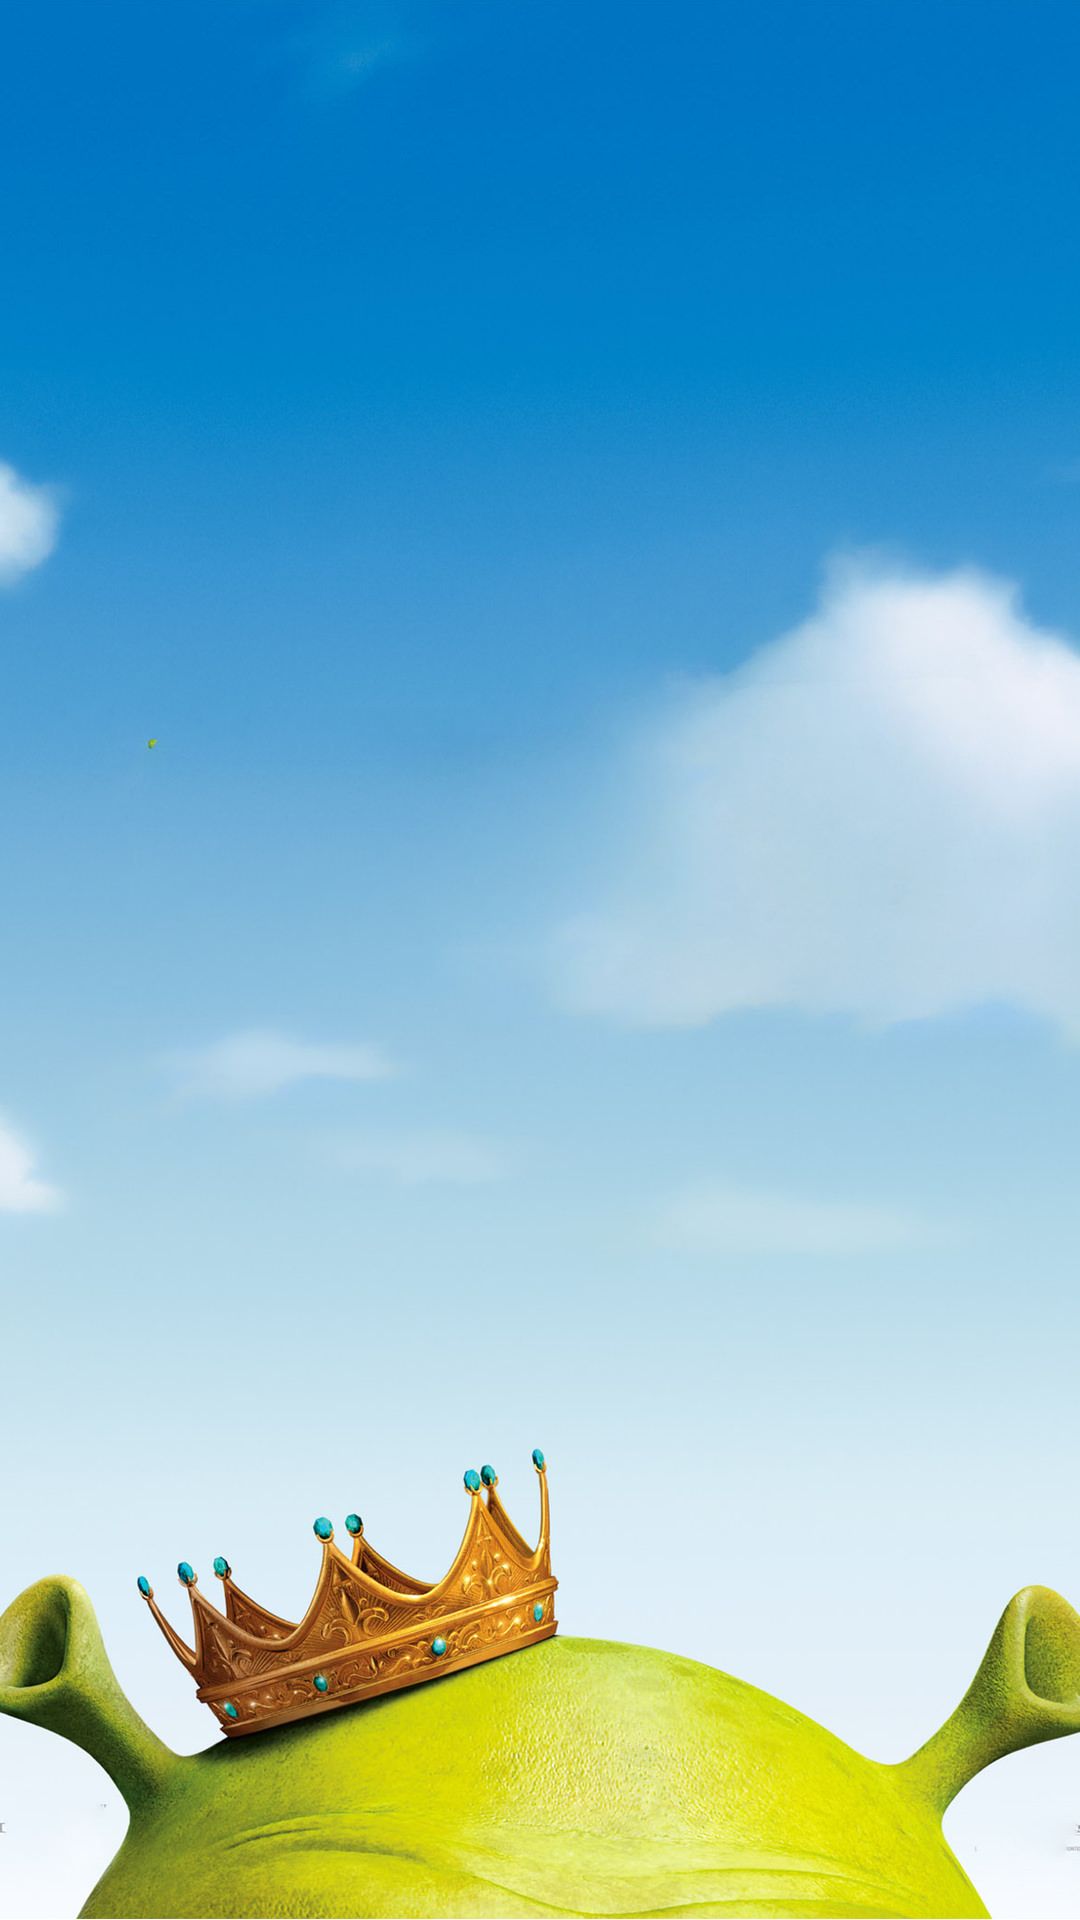 shrek fondos de pantalla iphone,cielo,paisaje natural,nube,calzado,ilustración